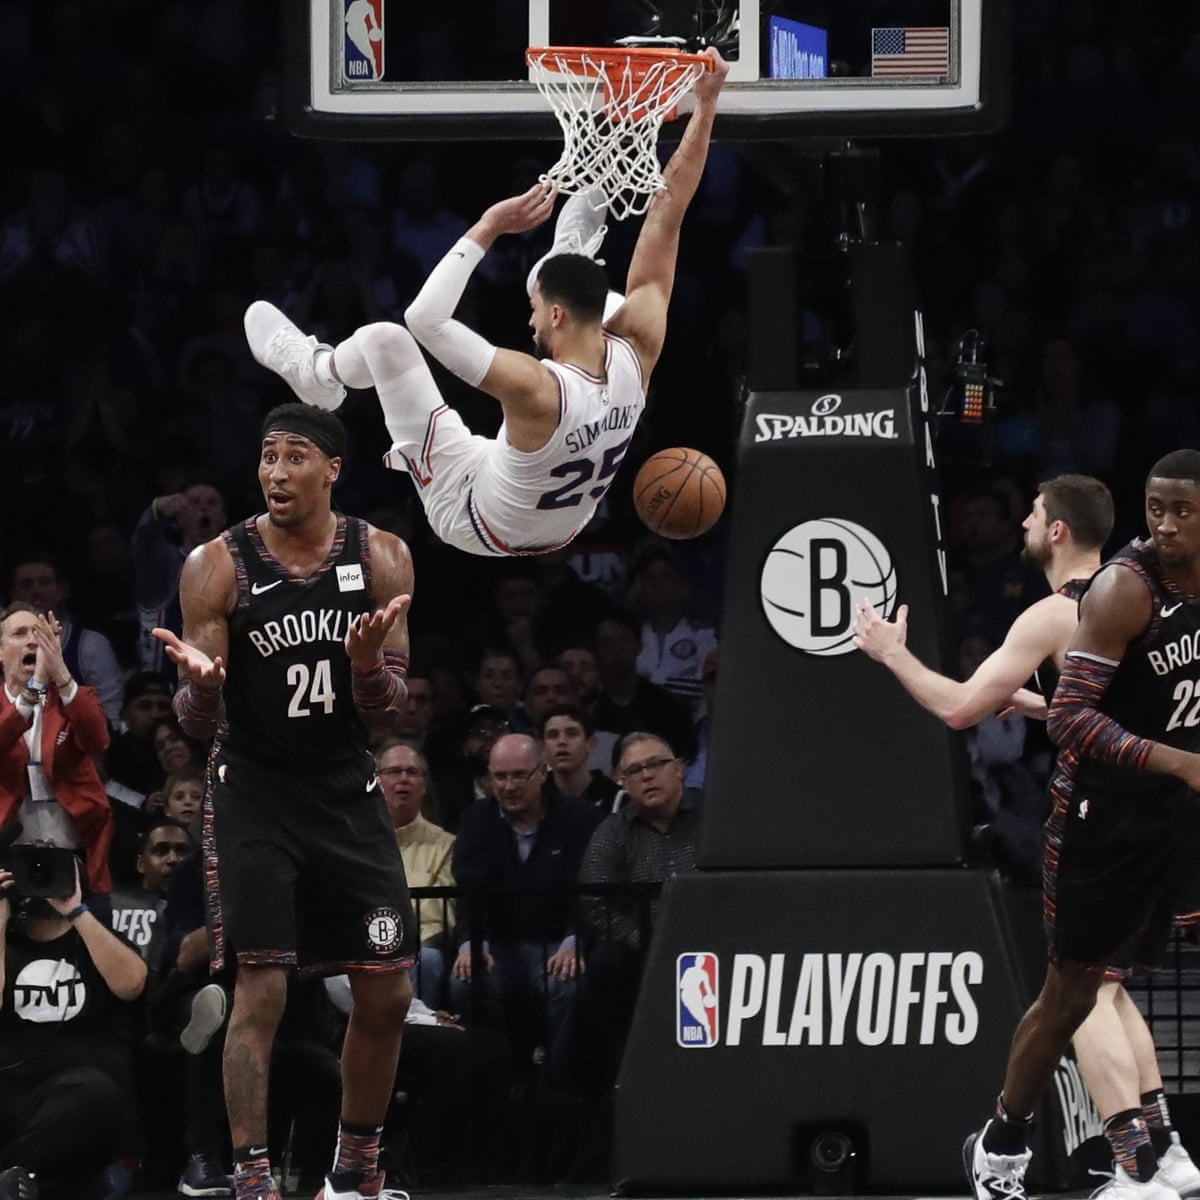 Ben Simmons shows NBA worth as Brooklyn Nets crushed, NBA